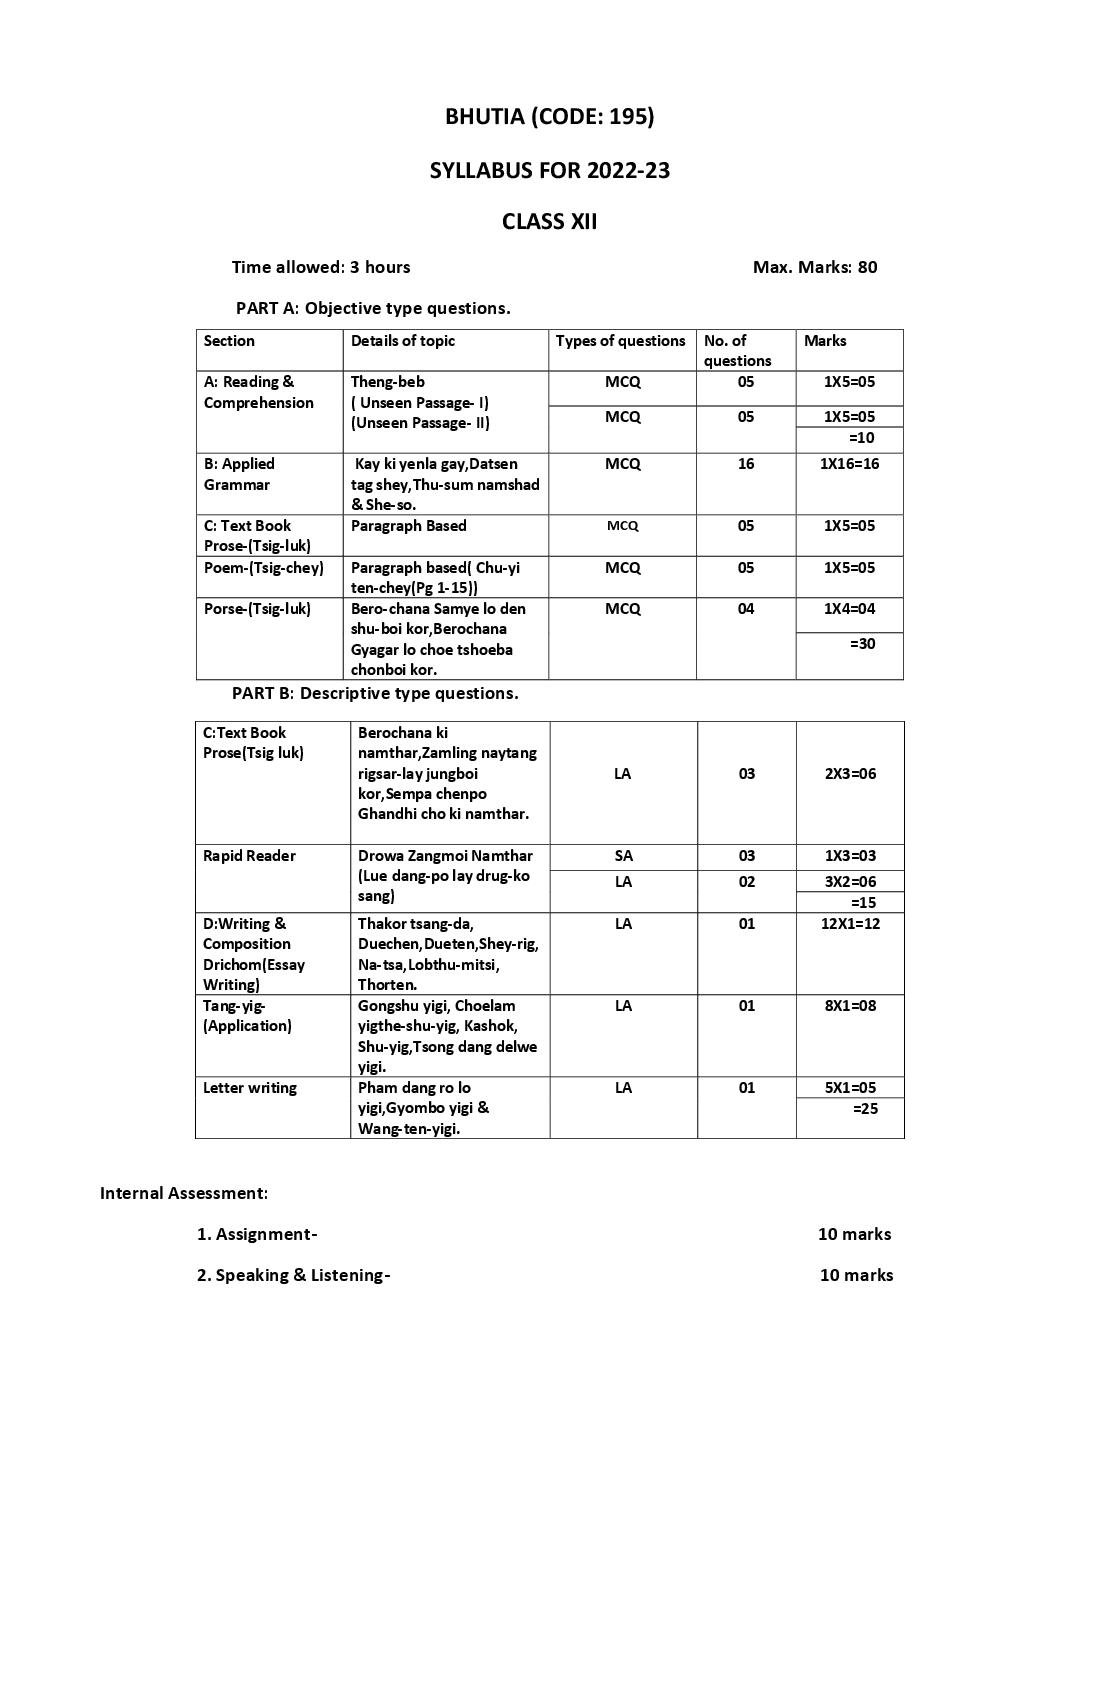 CBSE Class 12 Syllabus 2022-23 Bhutia - Page 1